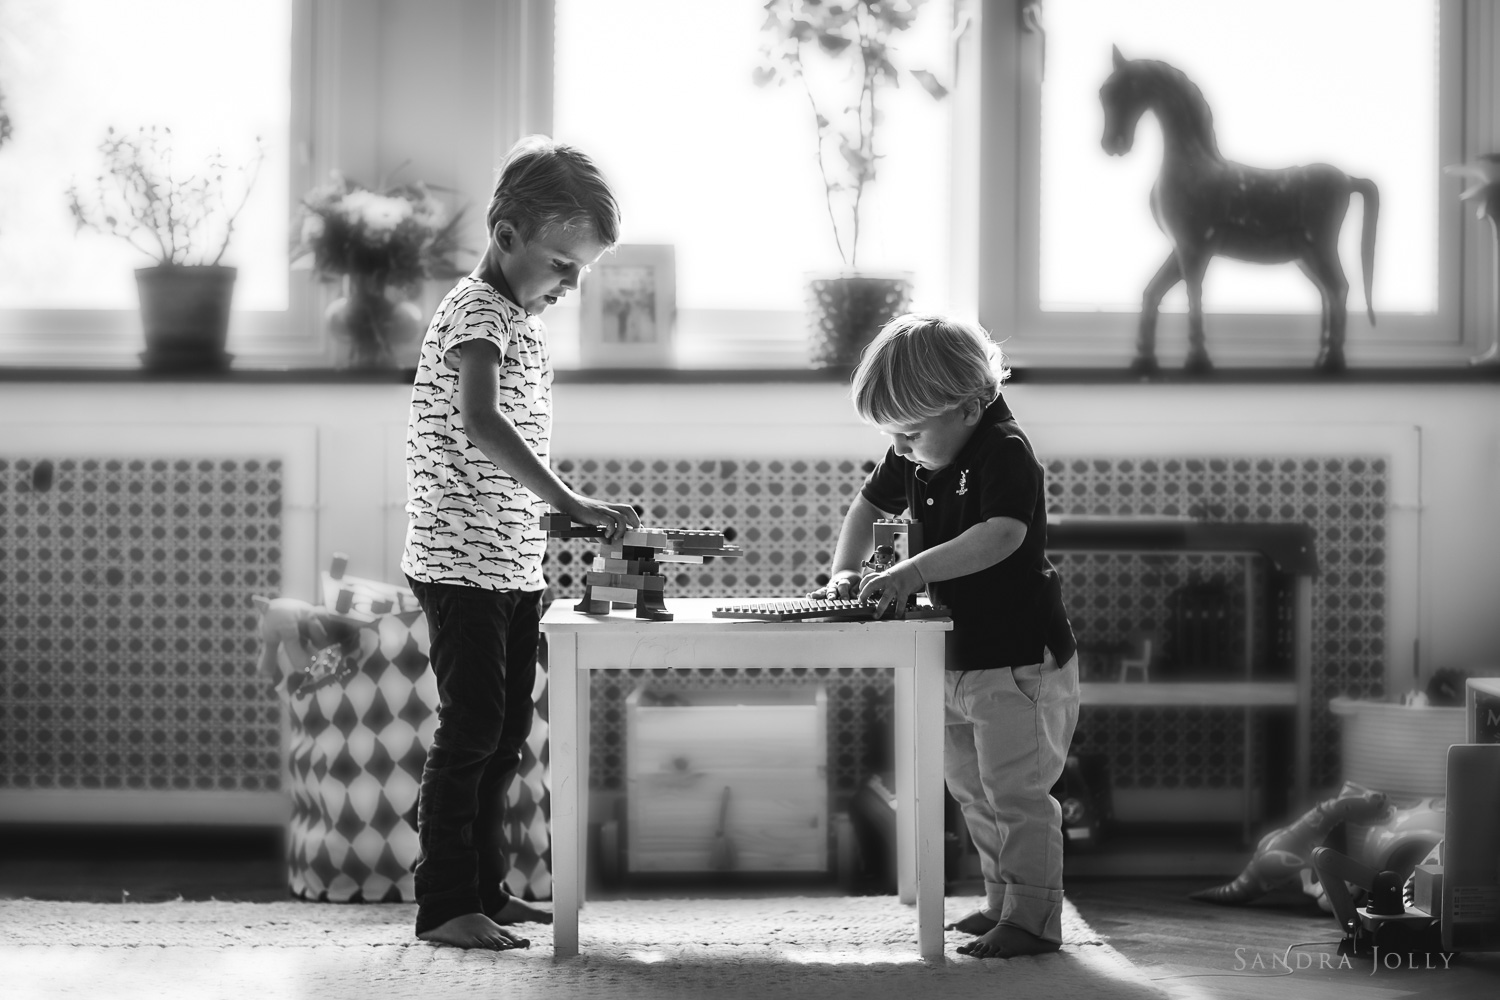 Brothers-playing-by-bra-Stockholm-familjefotograf-Sandra-Jolly.jpg